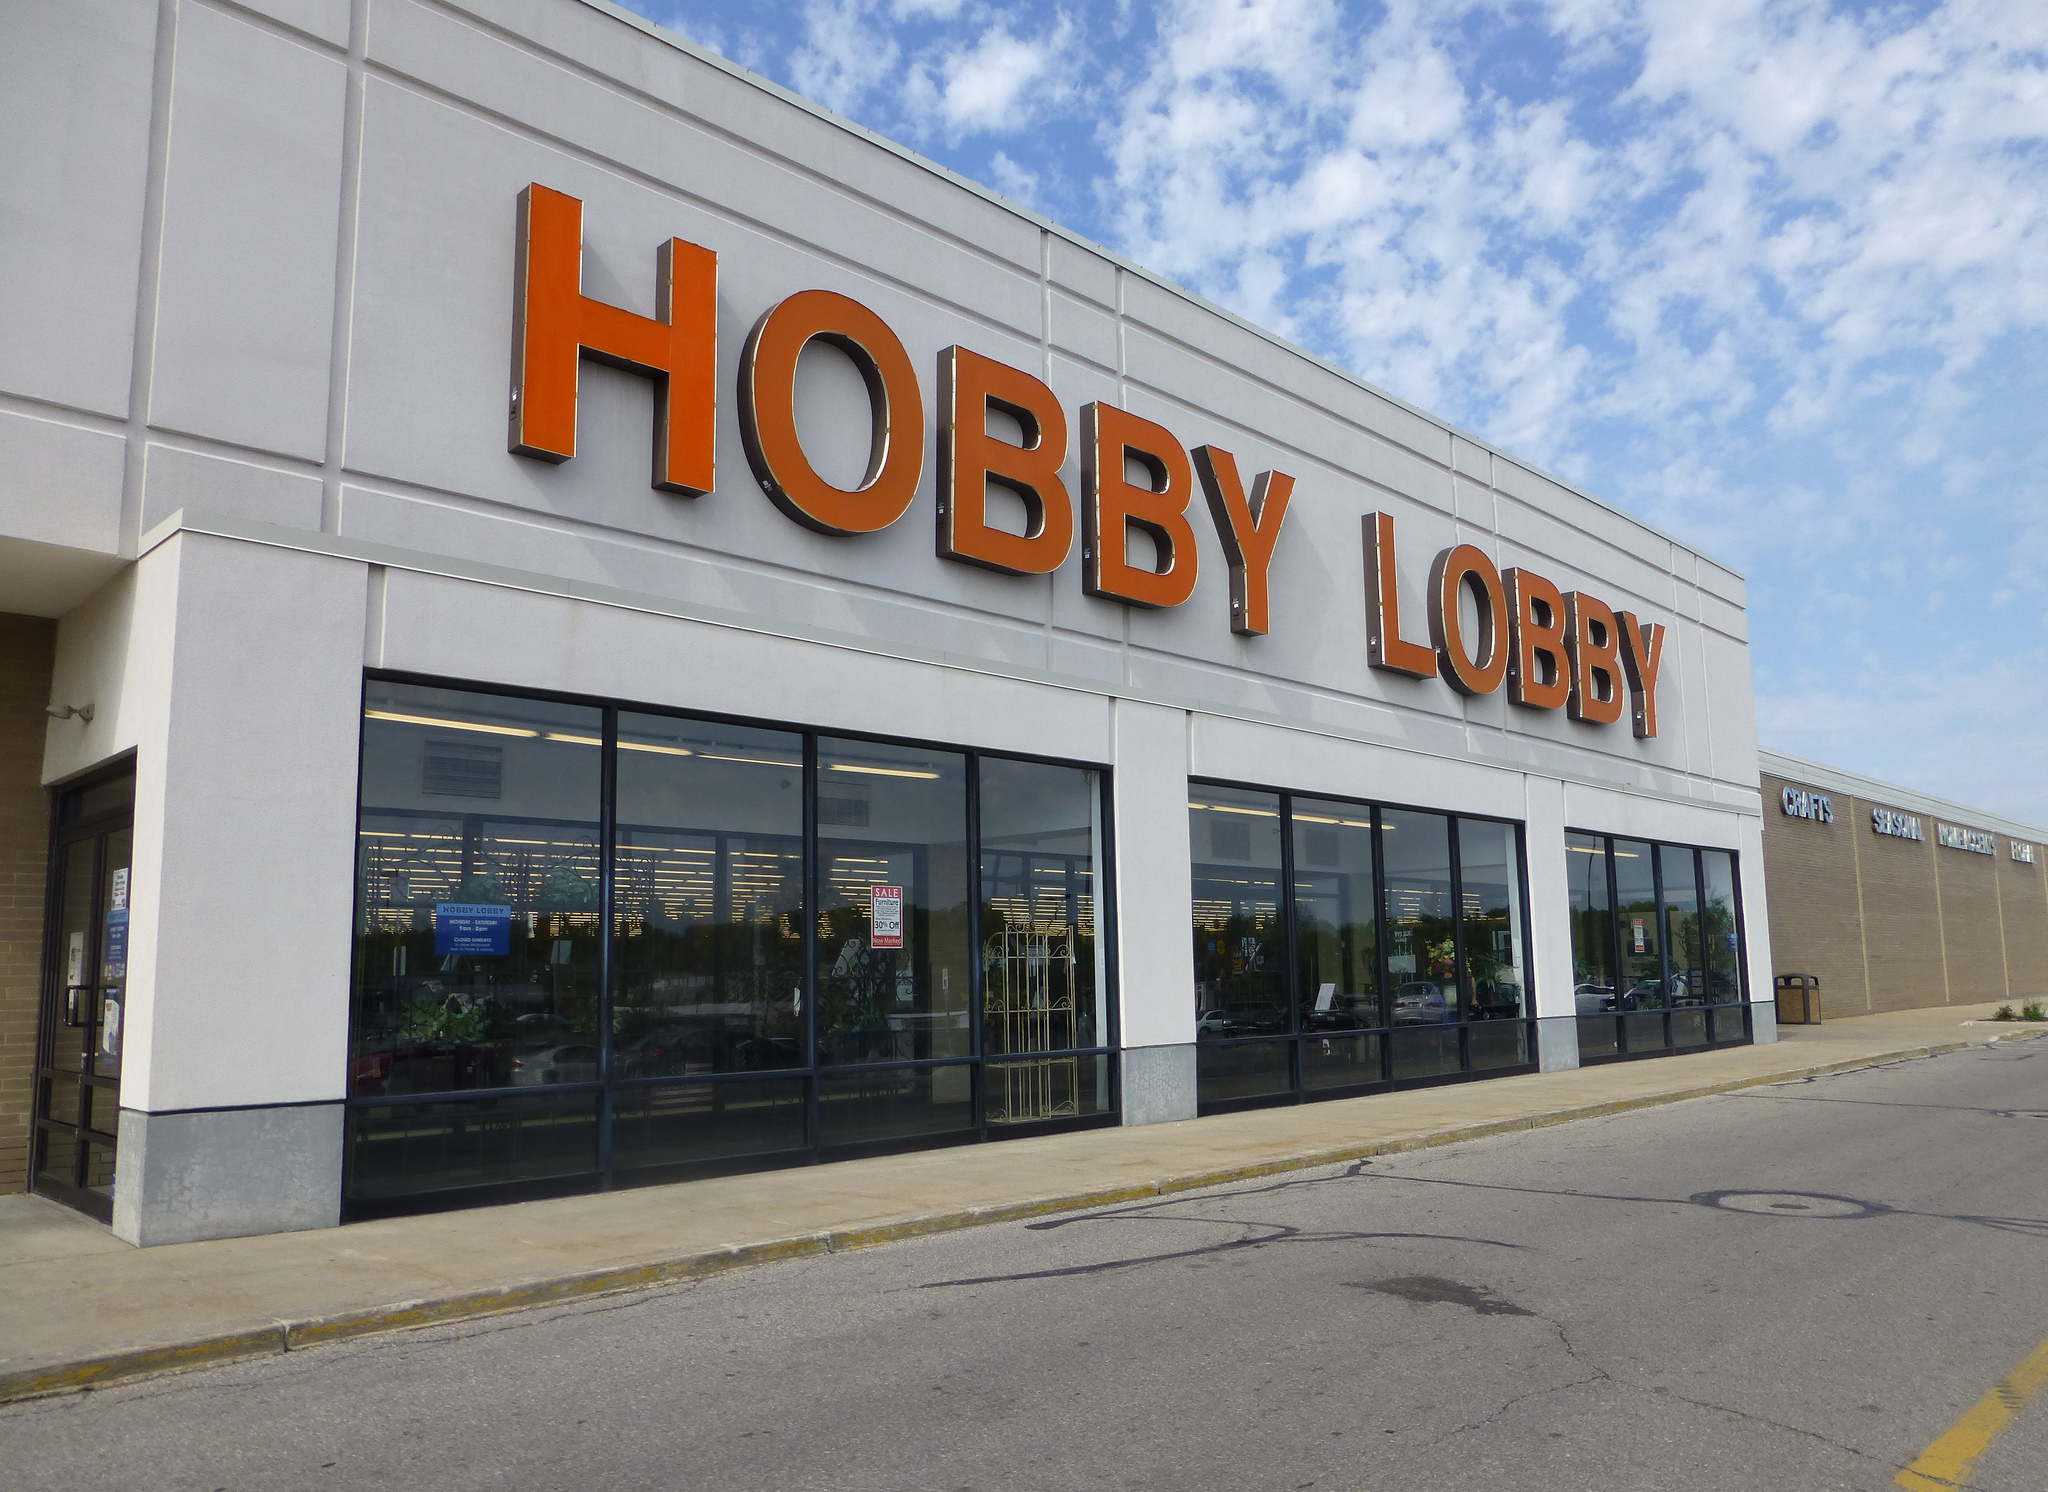 Hobby Lobby Storefront